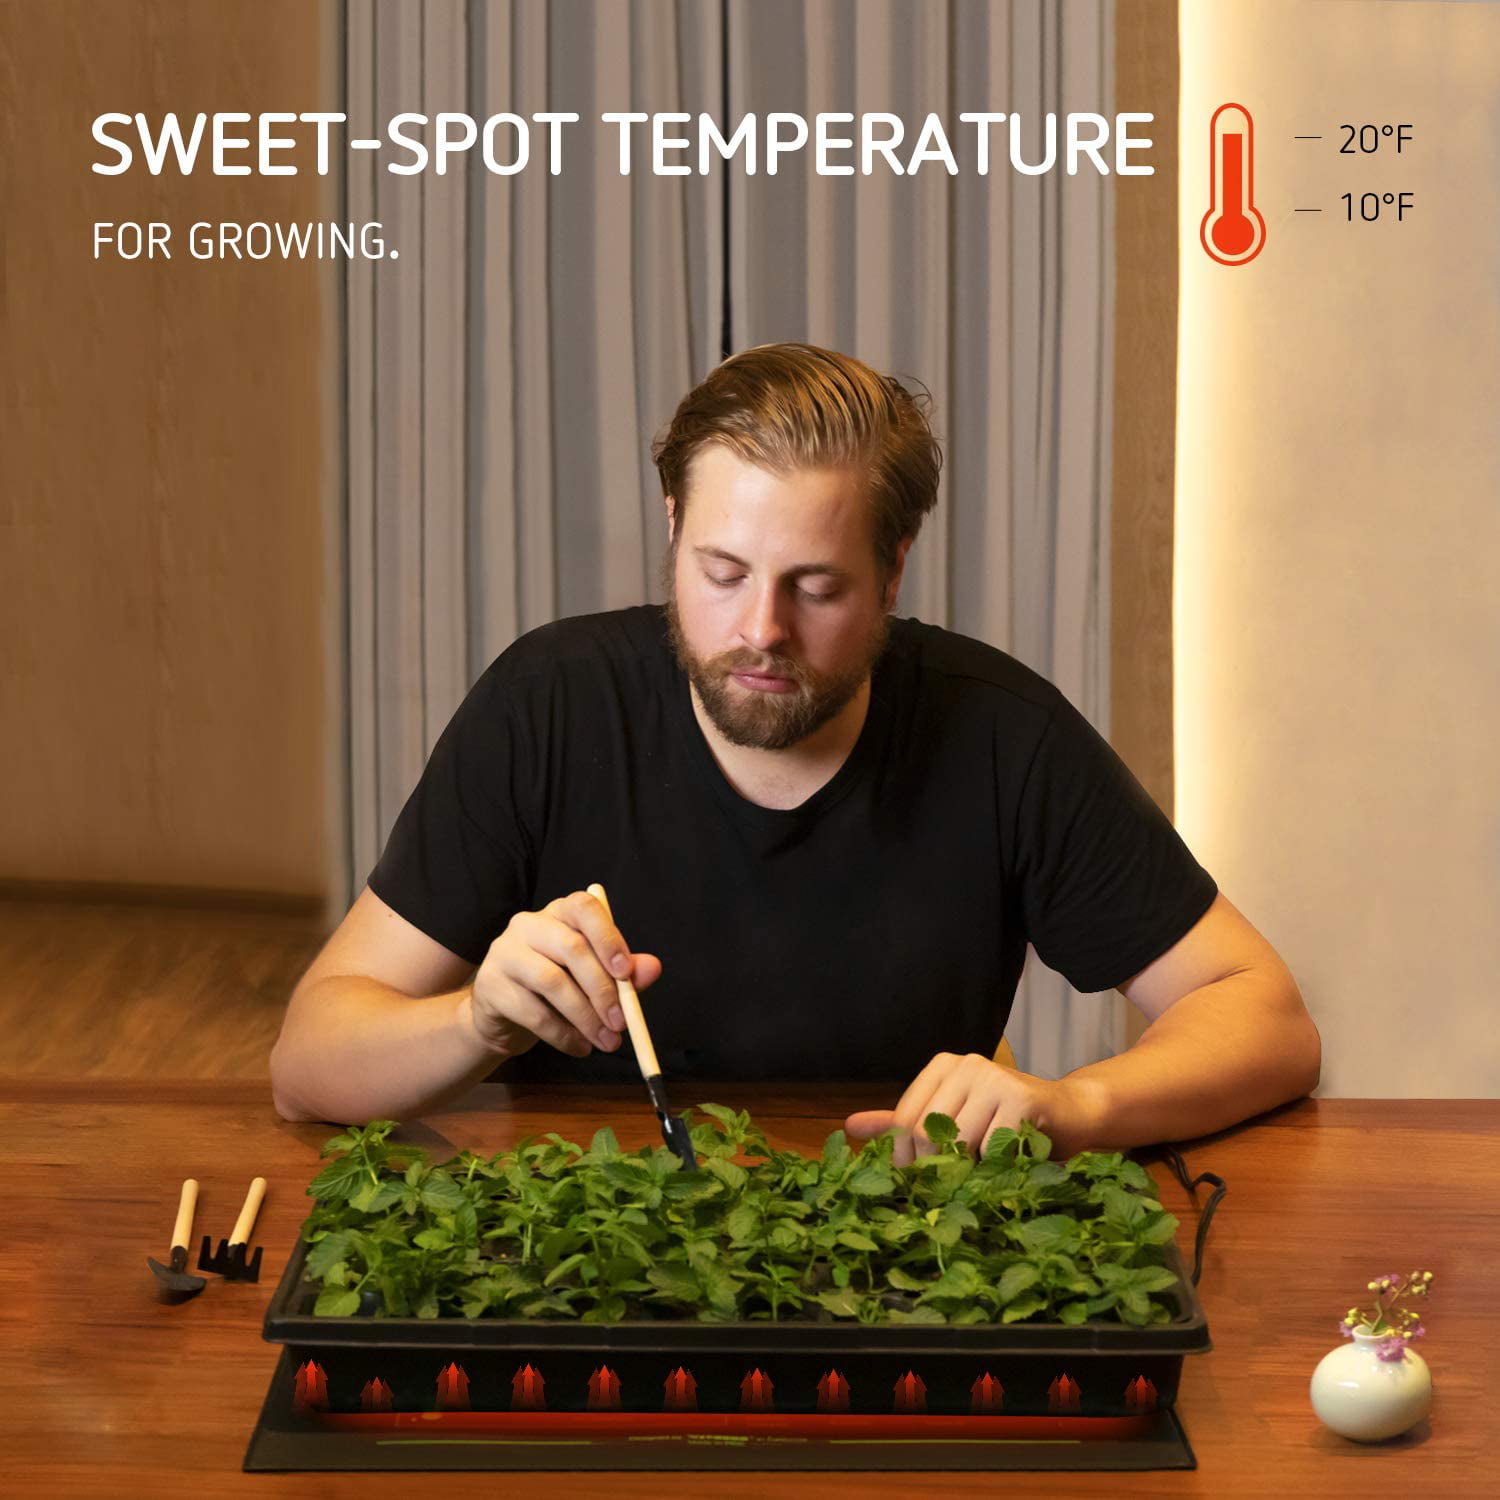 VIVOSUN 10" x 20" Seedling Heat Mat & Digital Thermostat Combo Set for Seed 